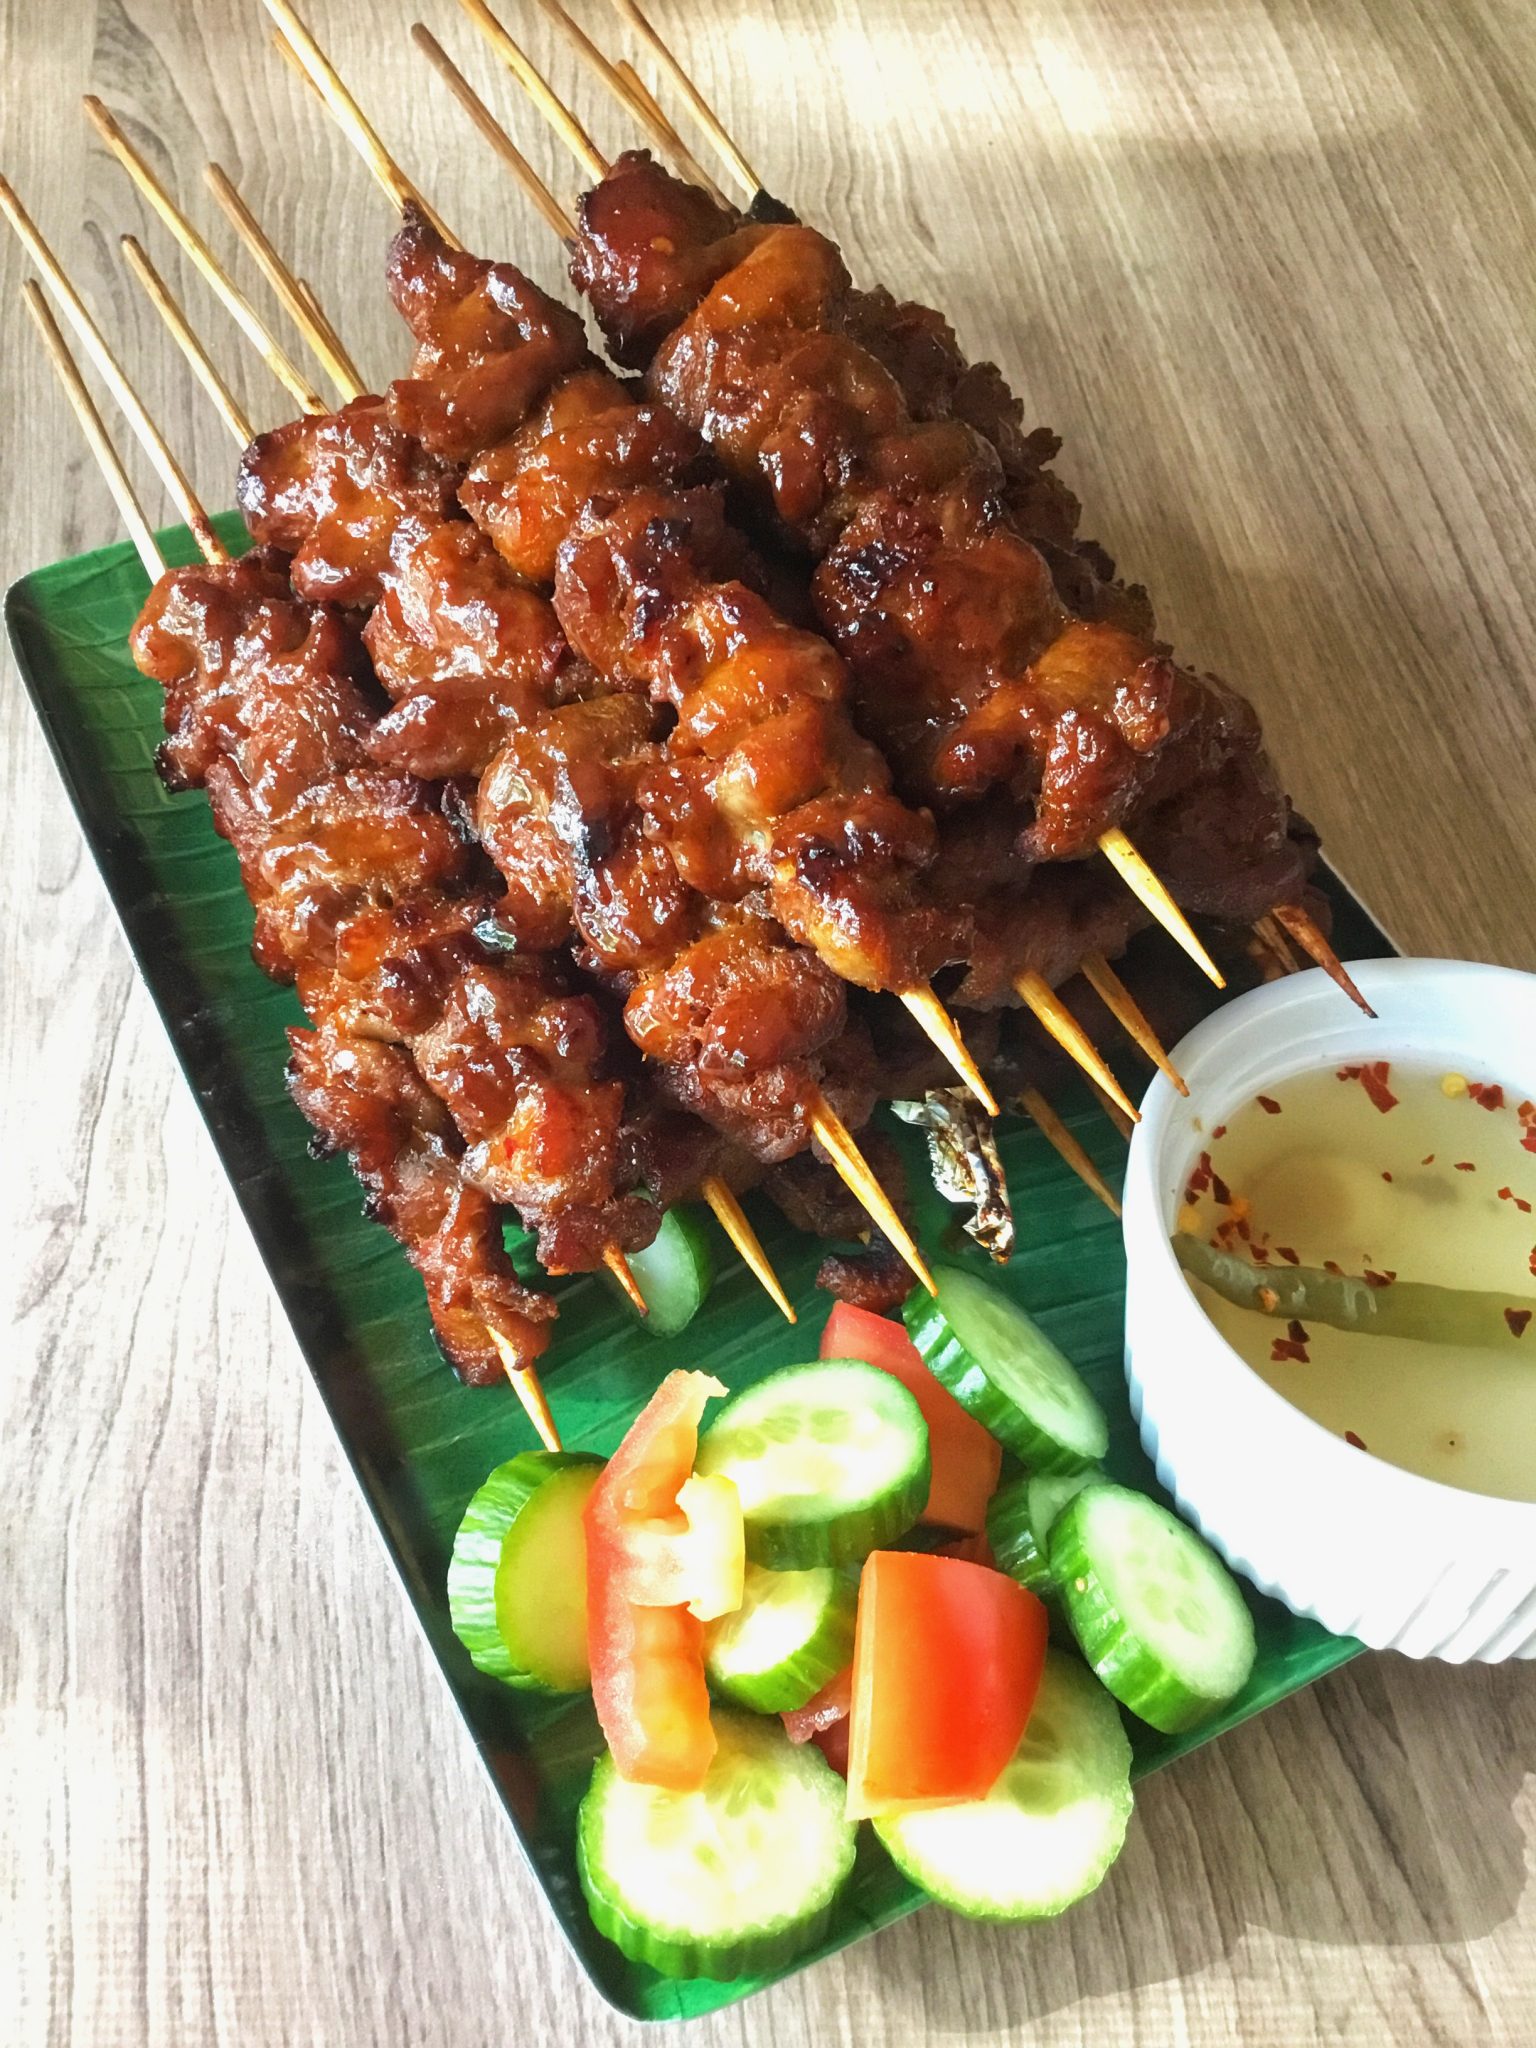 Best Filipino Pork Barbeque Recipe How To Make Pork Filipino Style | My ...